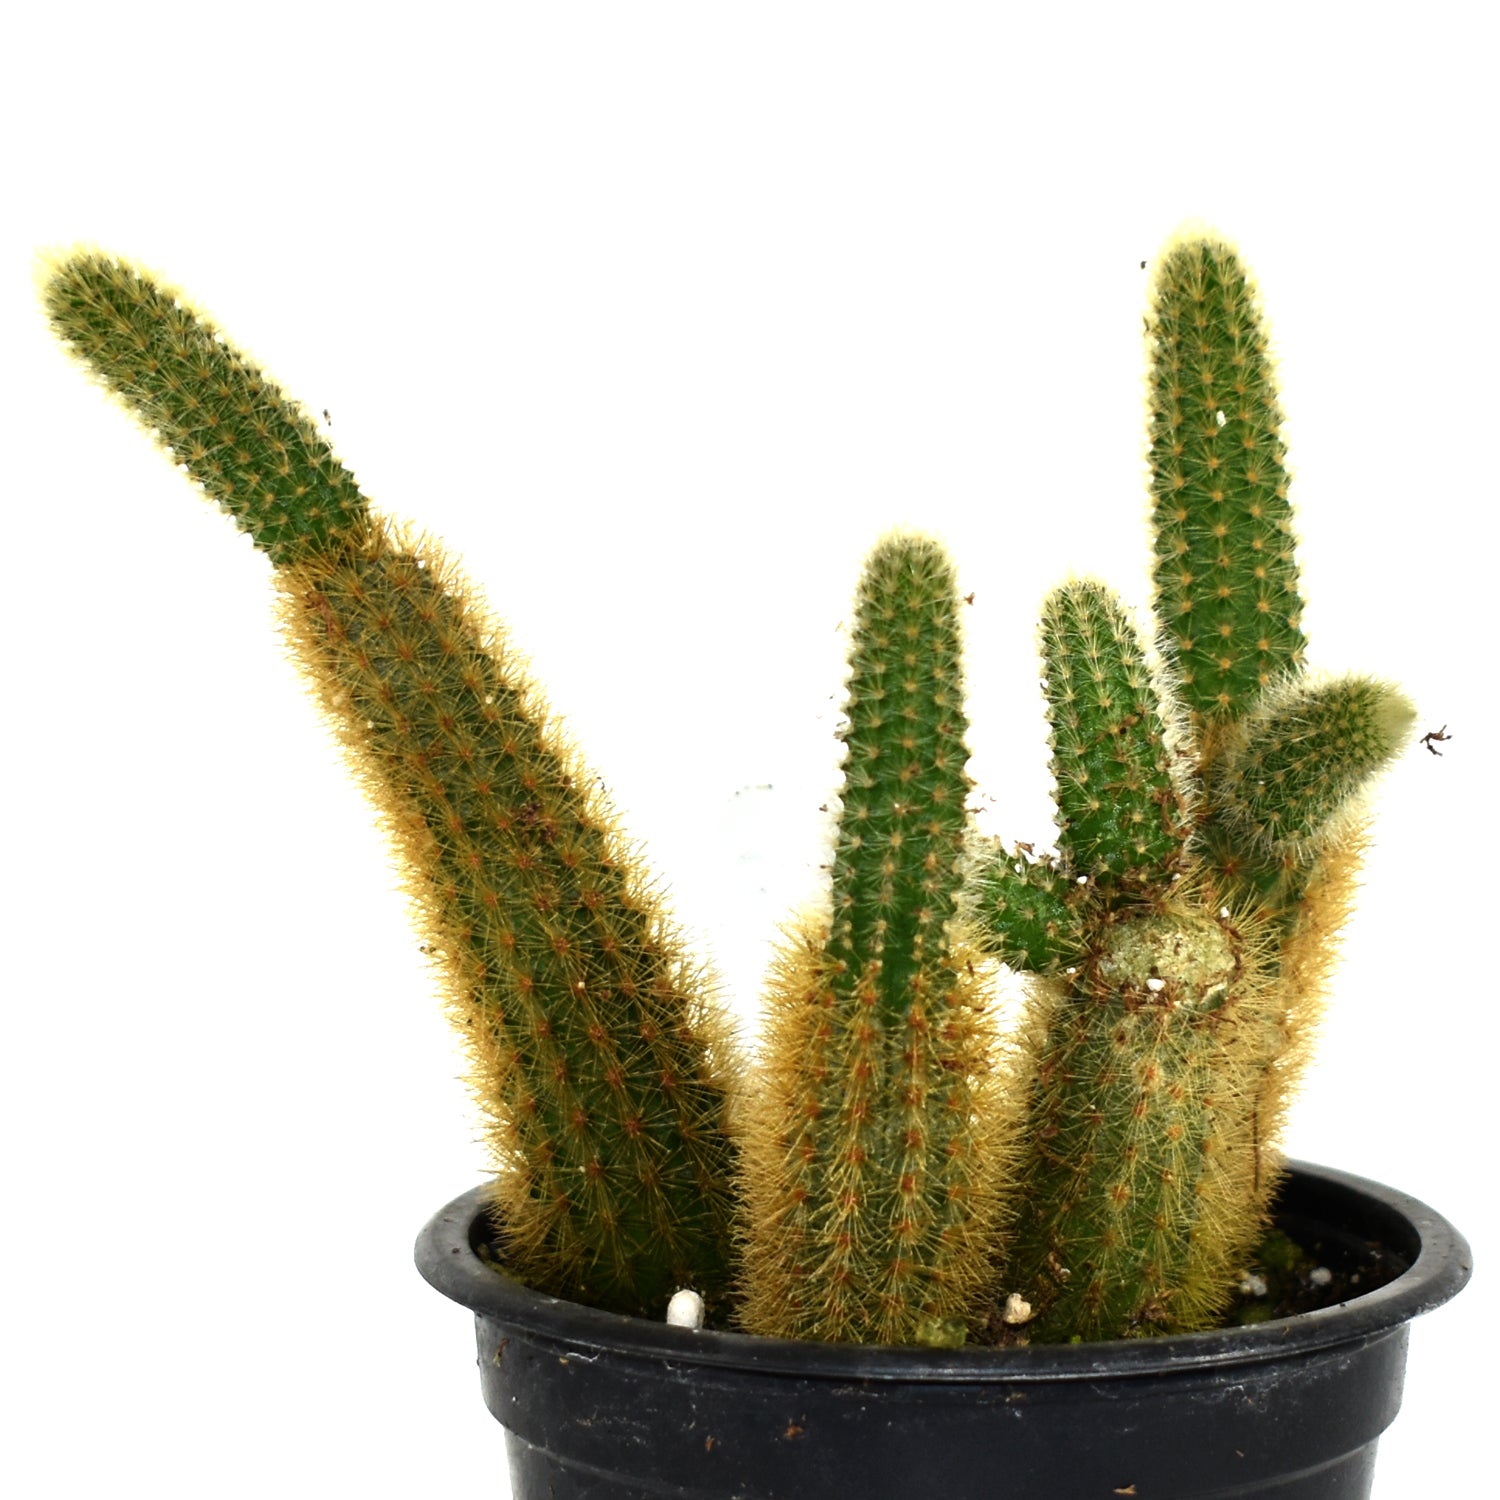 4 Golden Rat Tail Cactus Live Cactus 